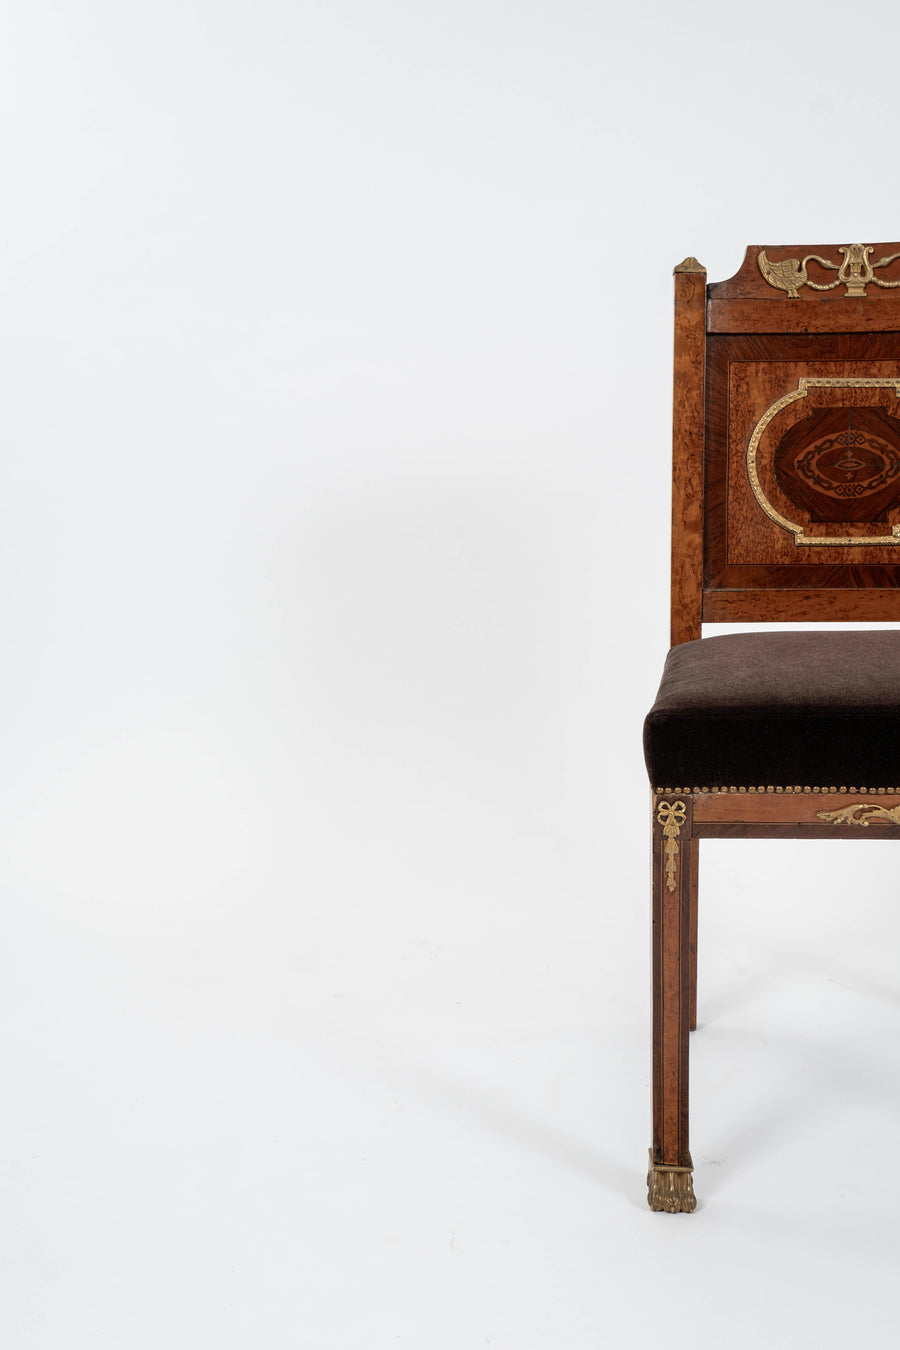 French Empire Burlwood Chair